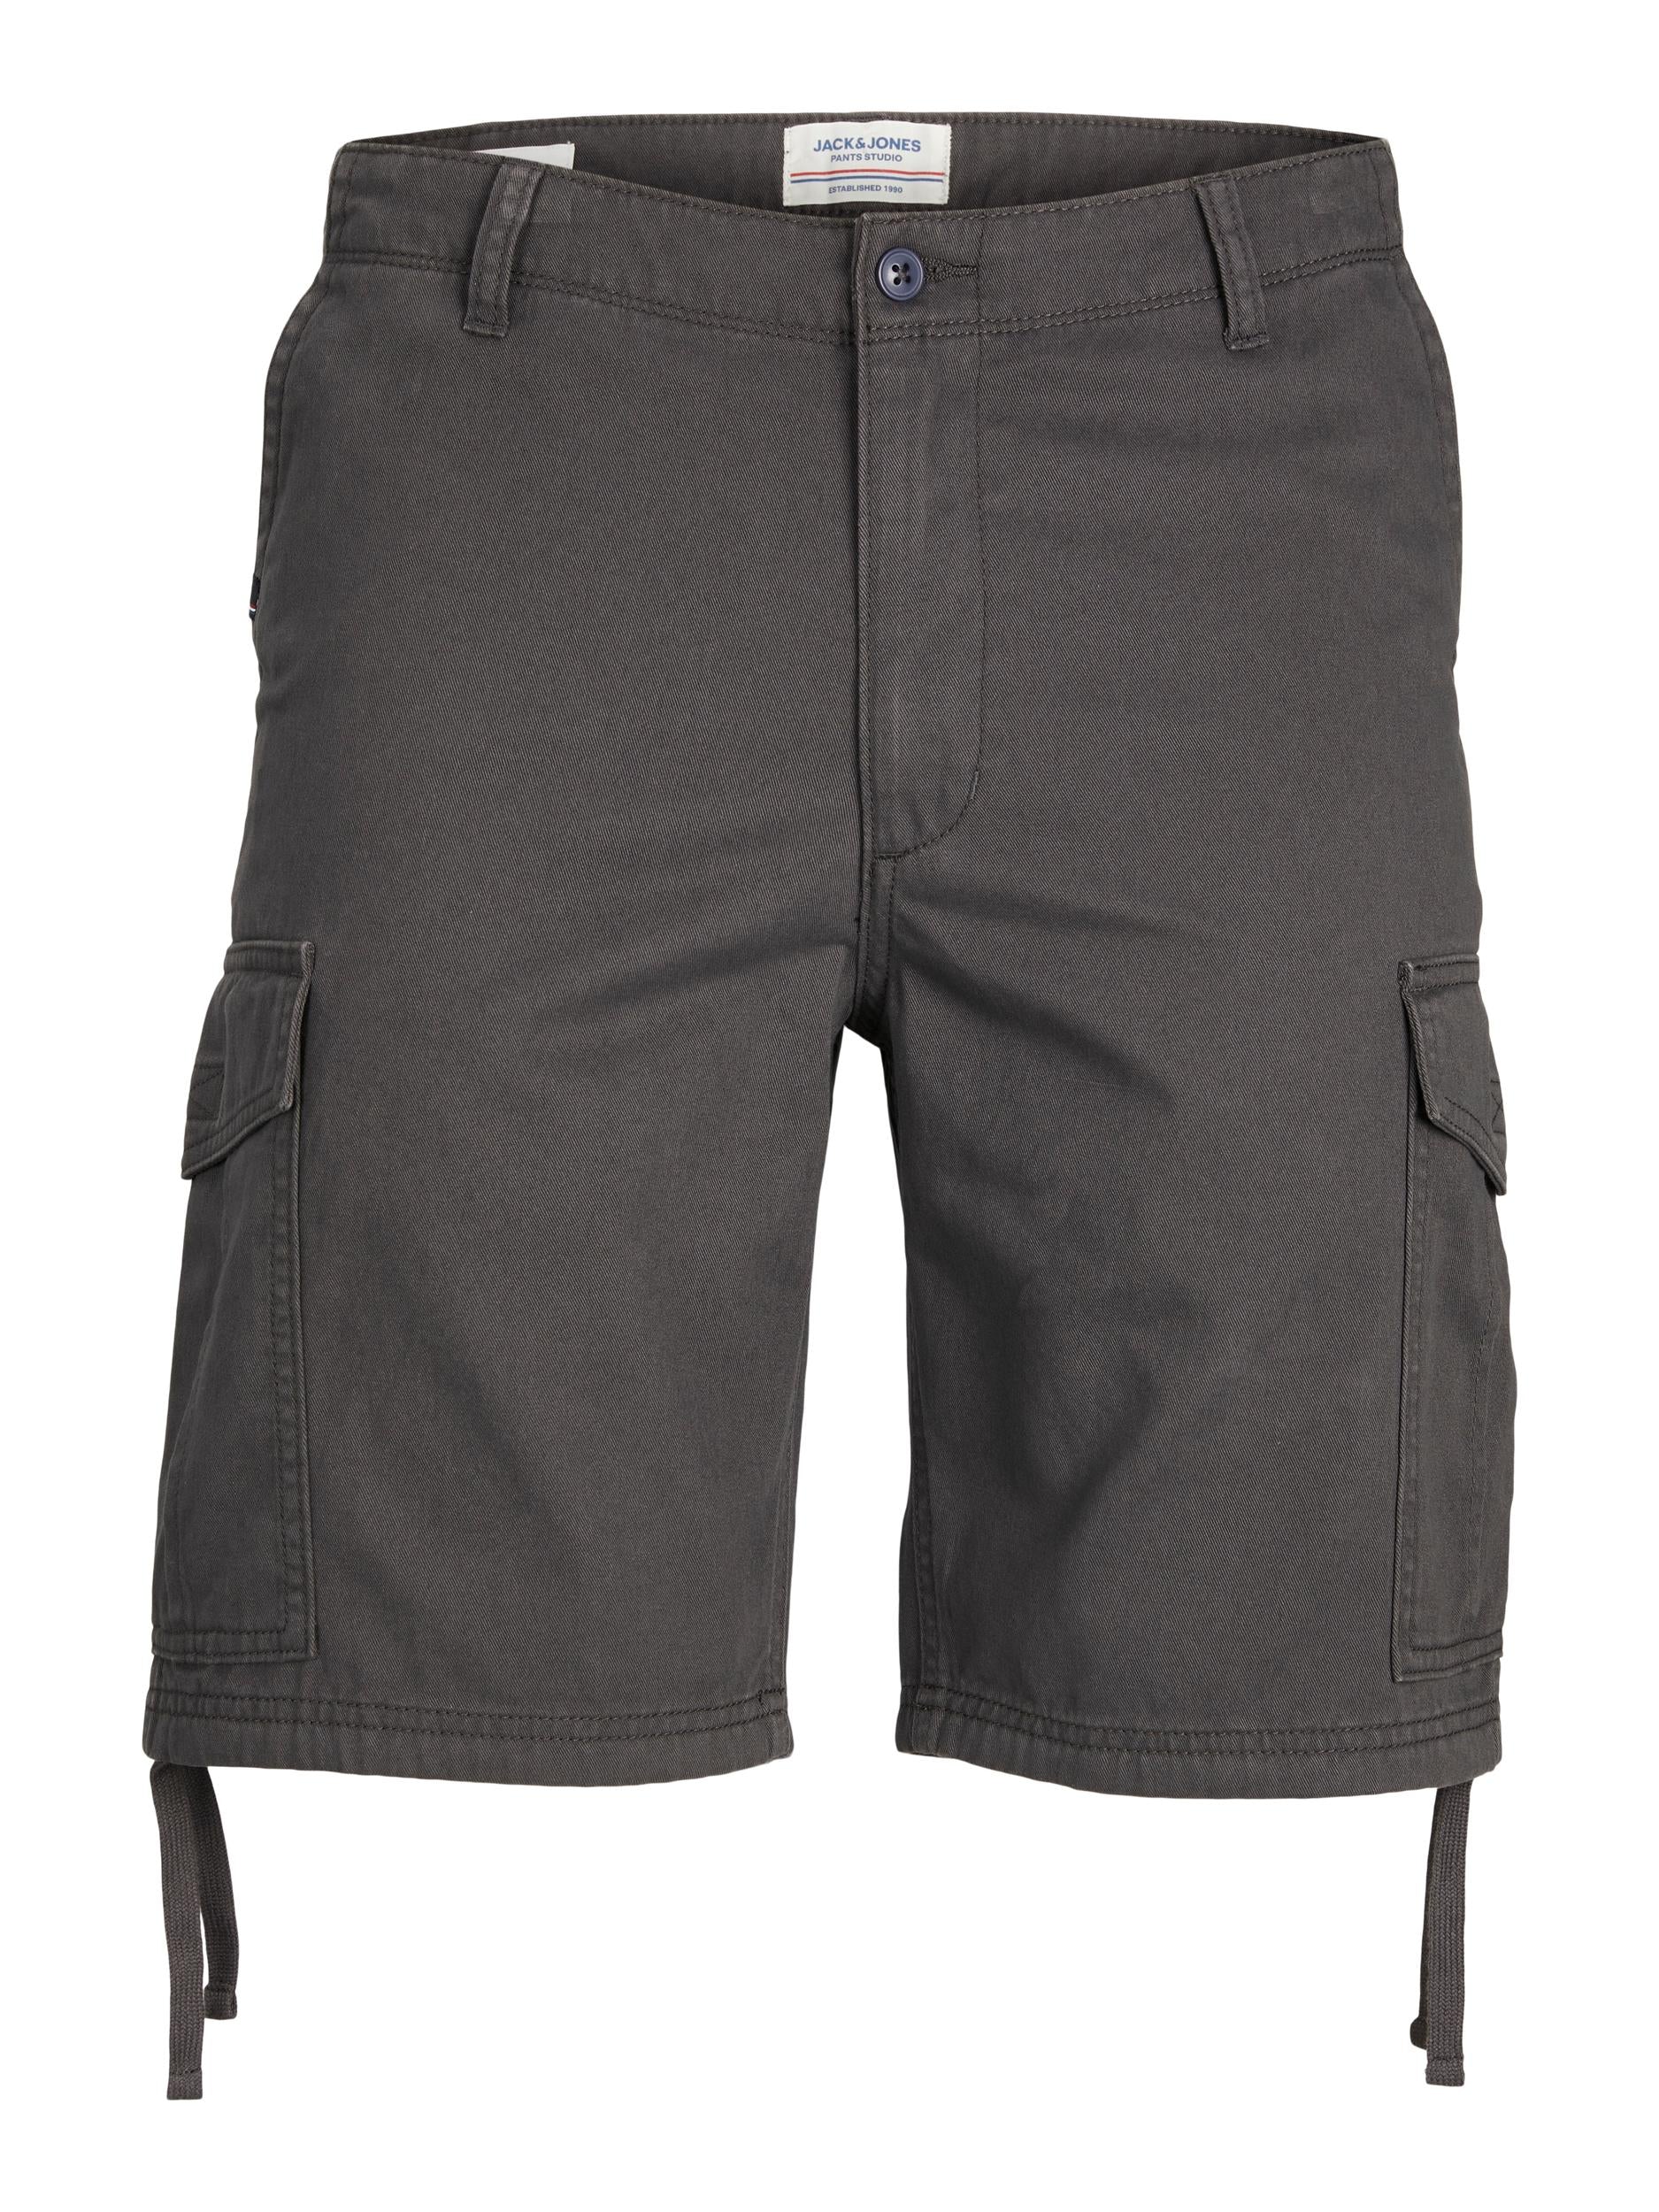 Men's Marley Cargo Shorts Asphalt-Front View